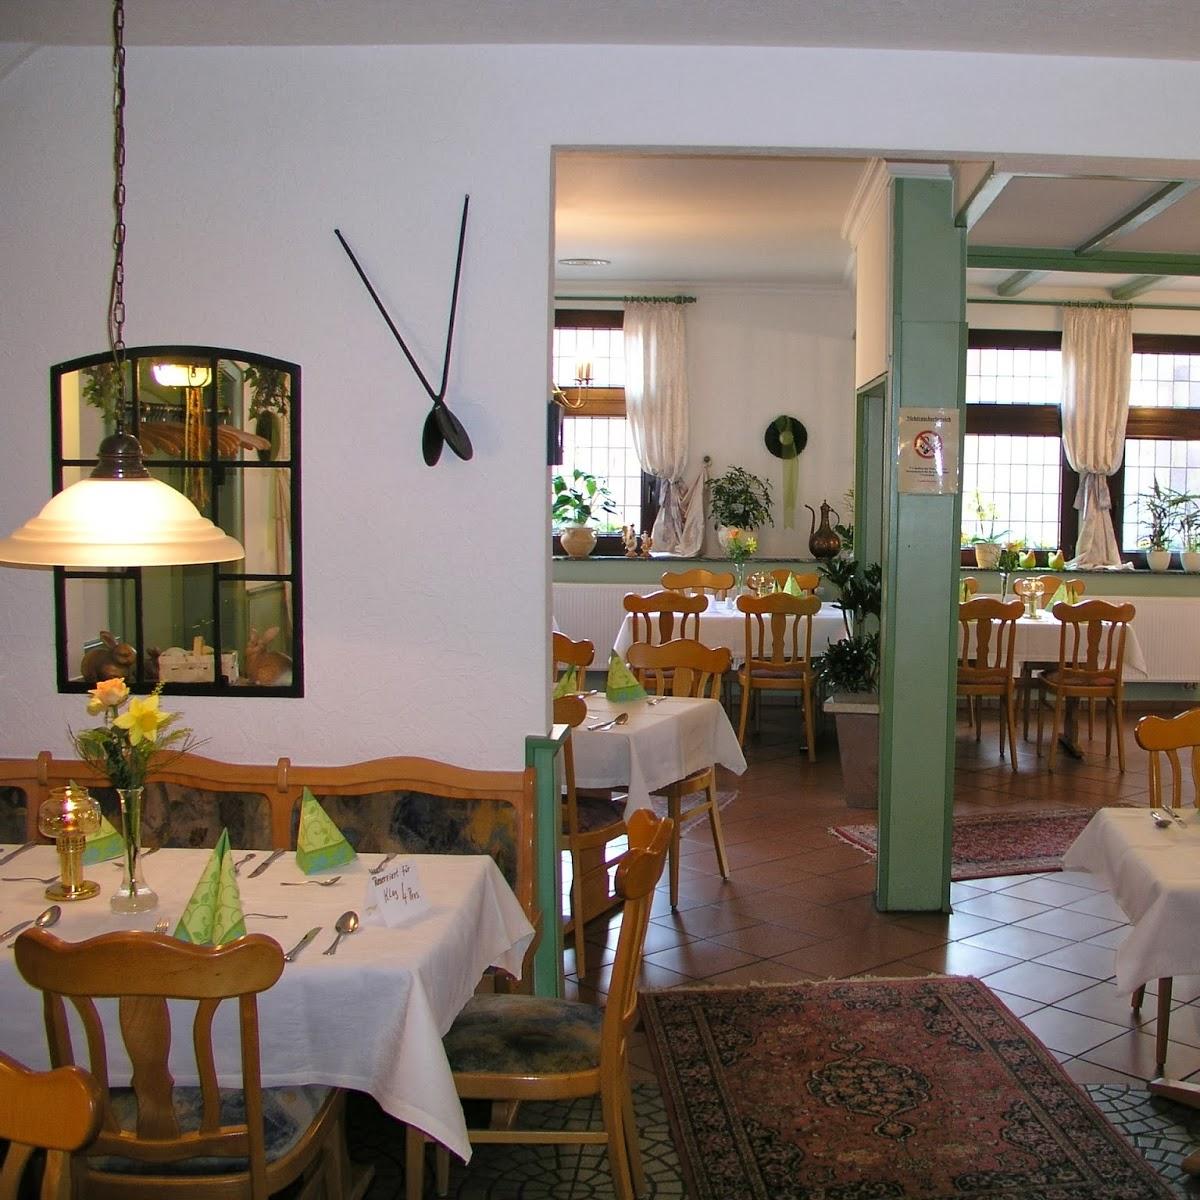 Restaurant "Wirtshaus Heiming" in Reken